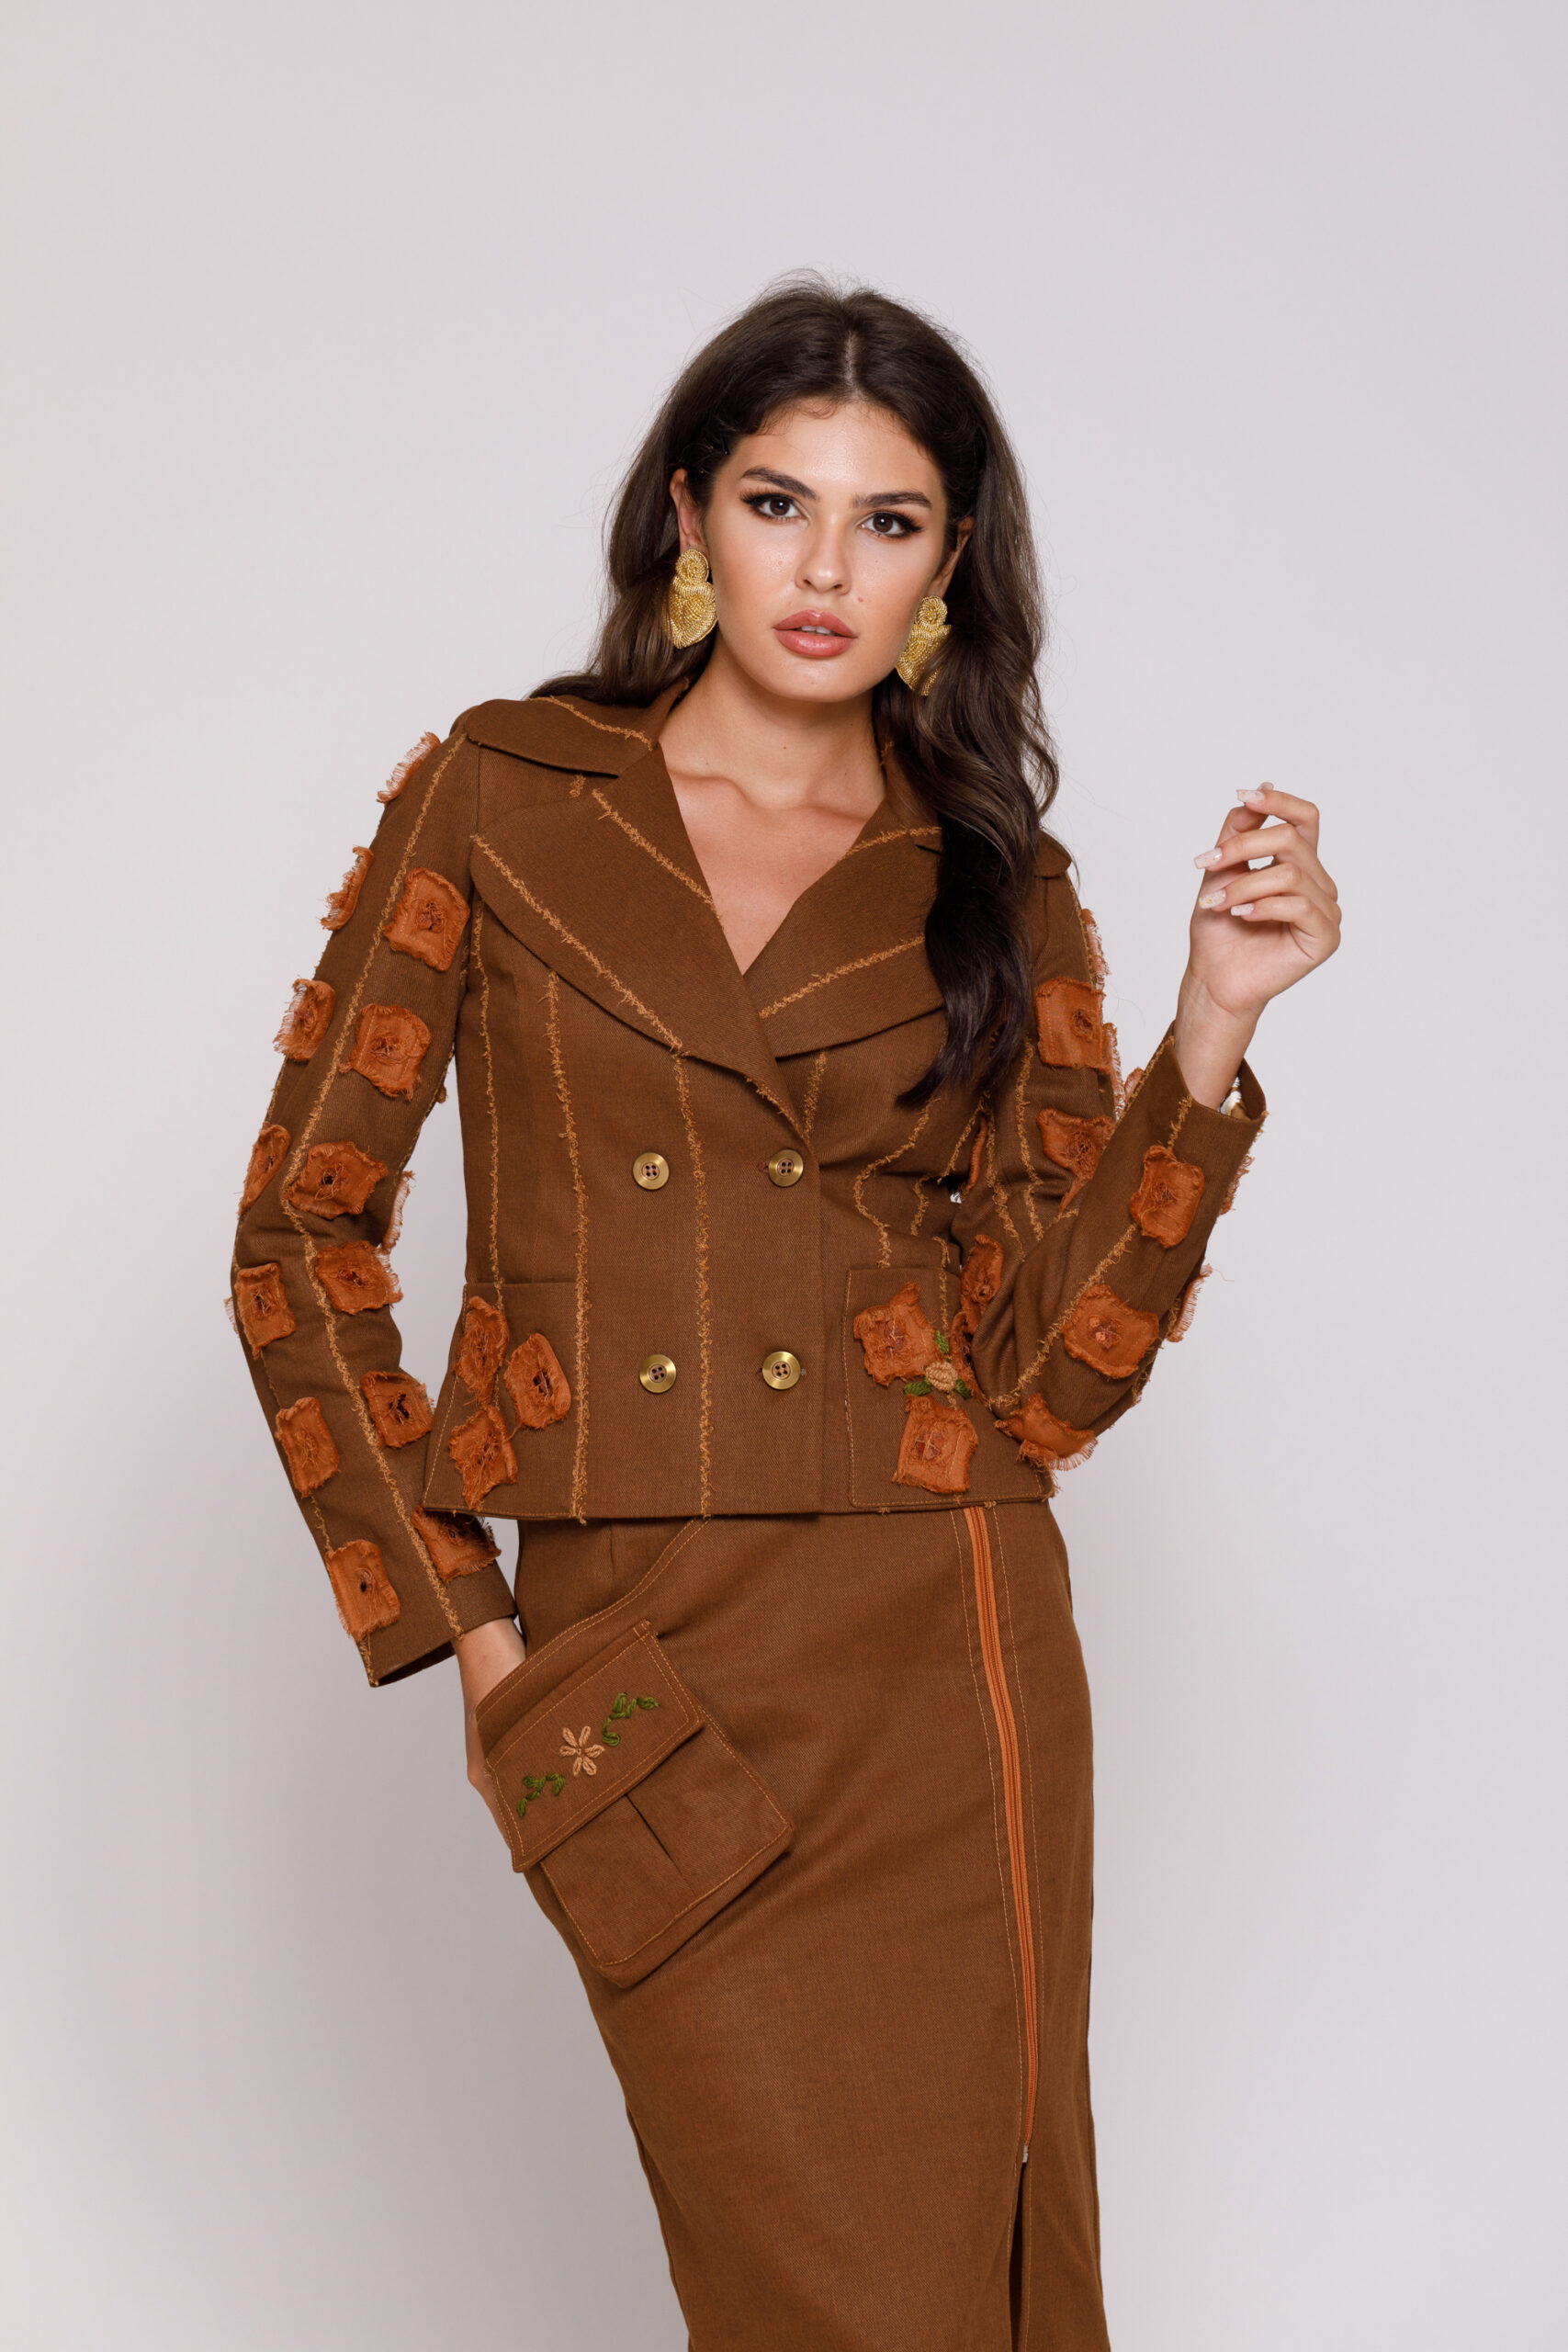 DORA Elegant jacket with linen applications and sequins. Natural fabrics, original design, handmade embroidery